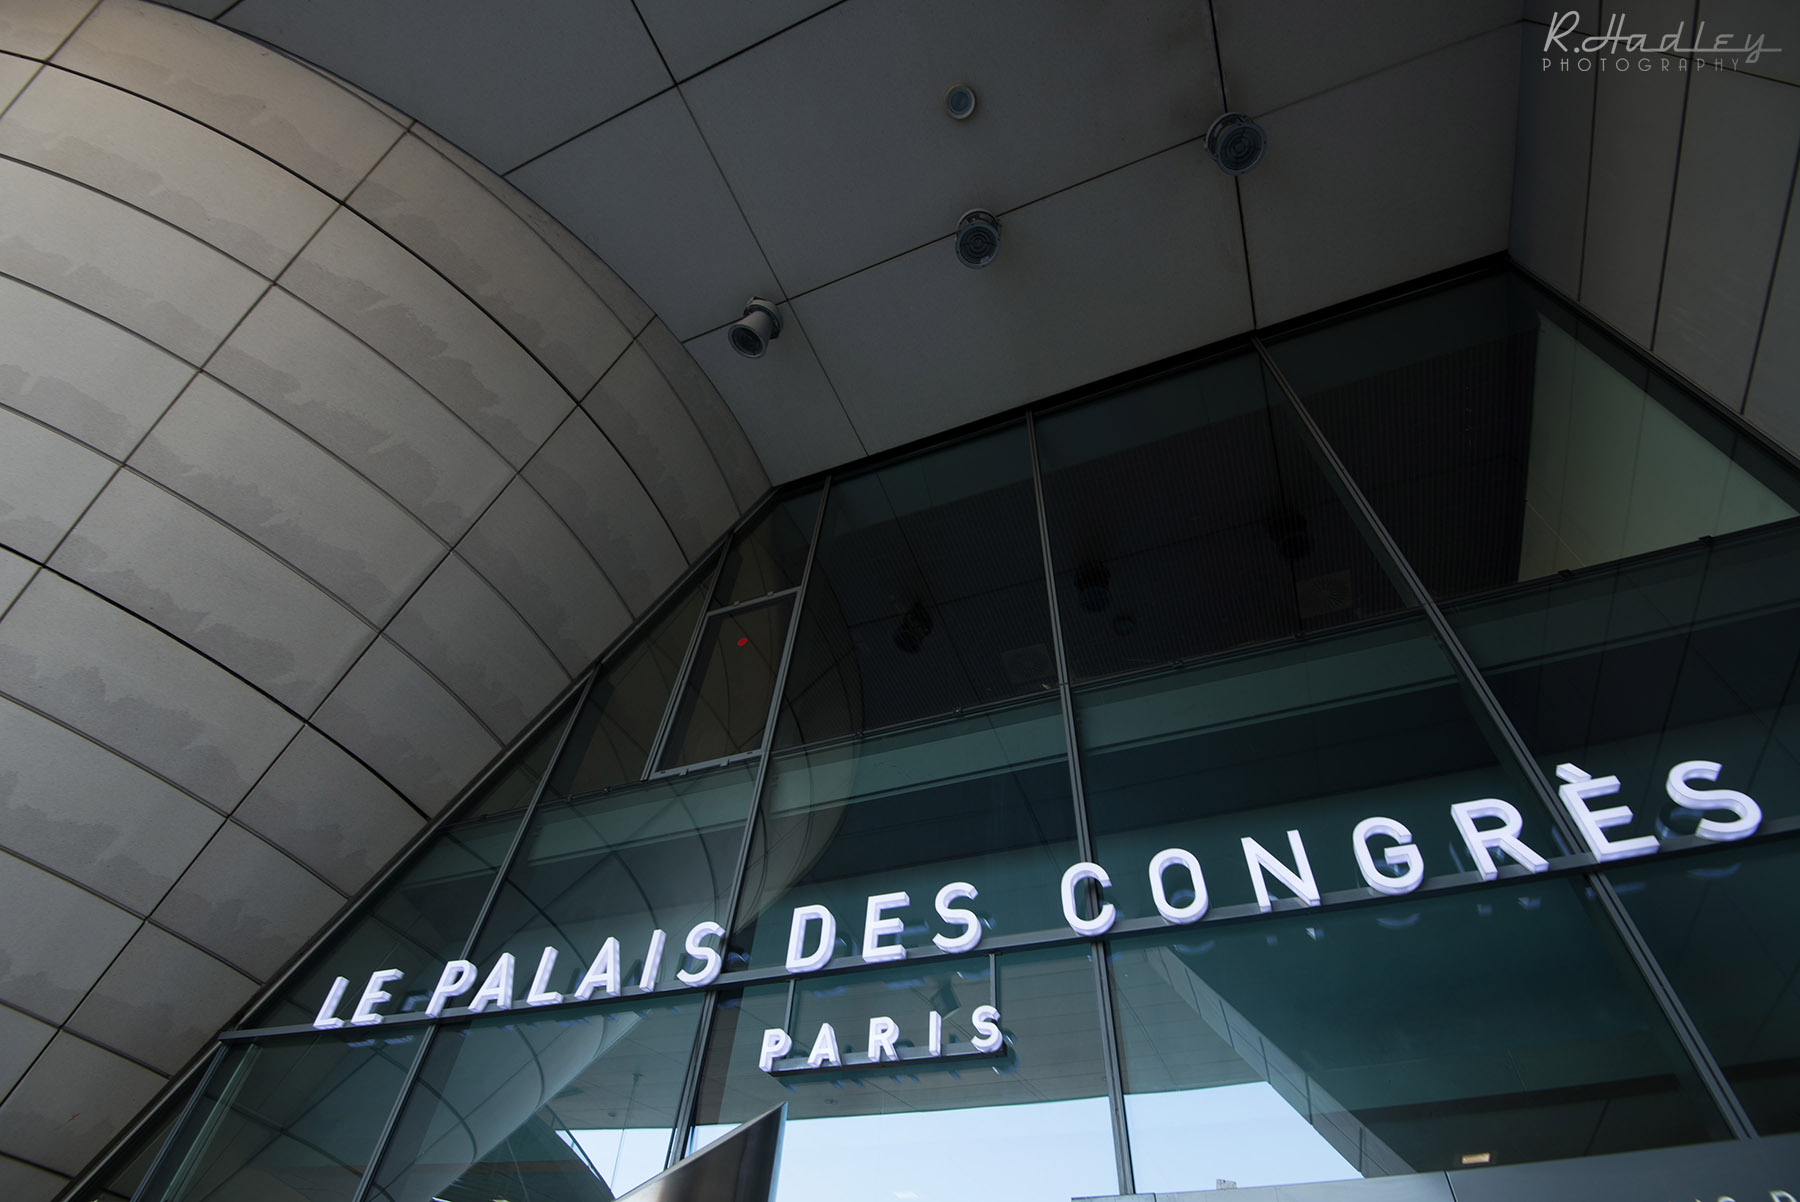 Congress event photographer in Paris at Le Palais des Congres